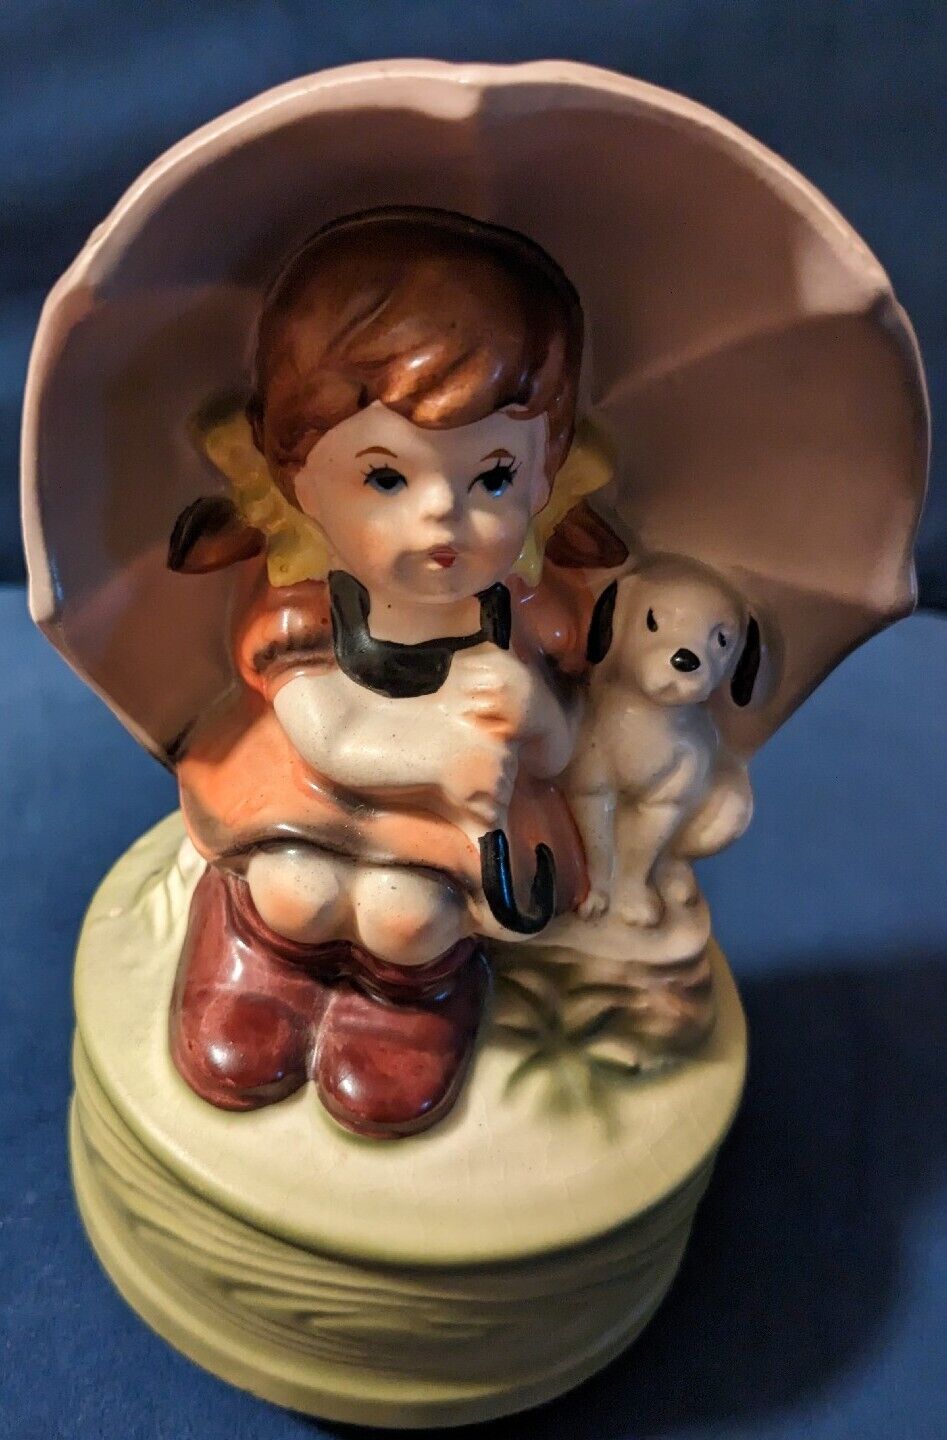 Vintage Ceramic Music Box Girl with Dog under Umbrella made in Japan